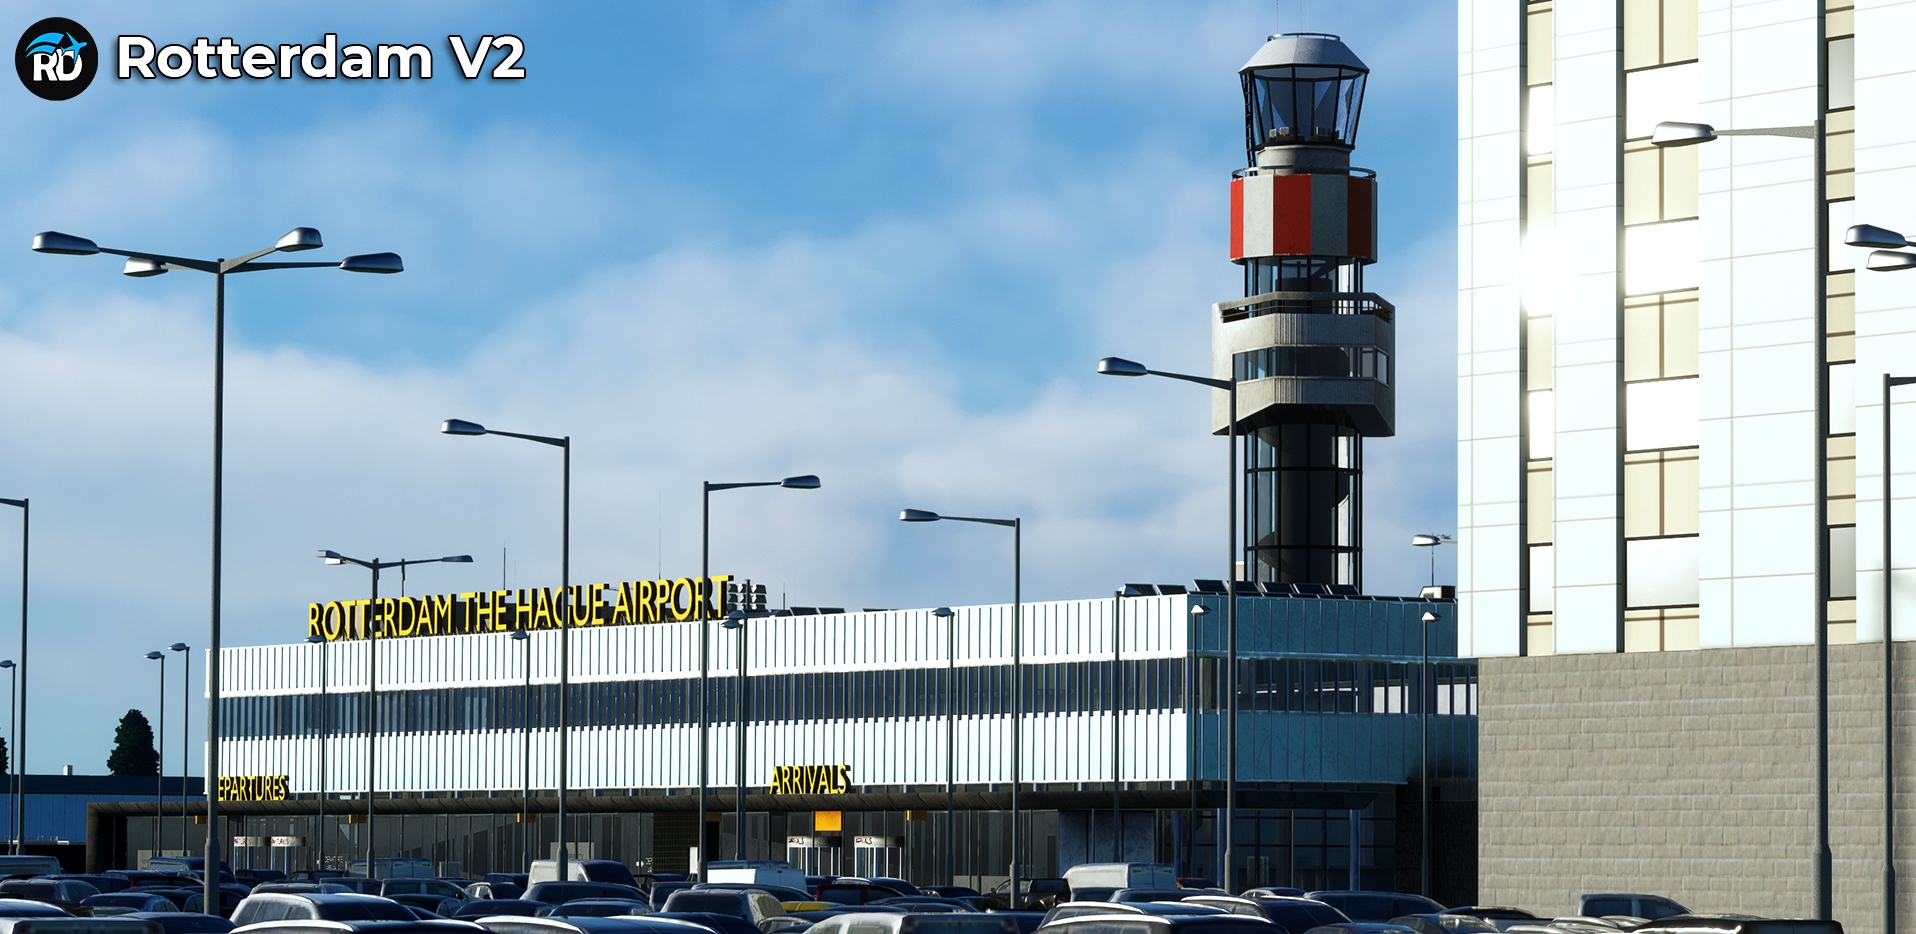 EHRD - Rotterdam Airport v2  Microsoft Flight Simulator